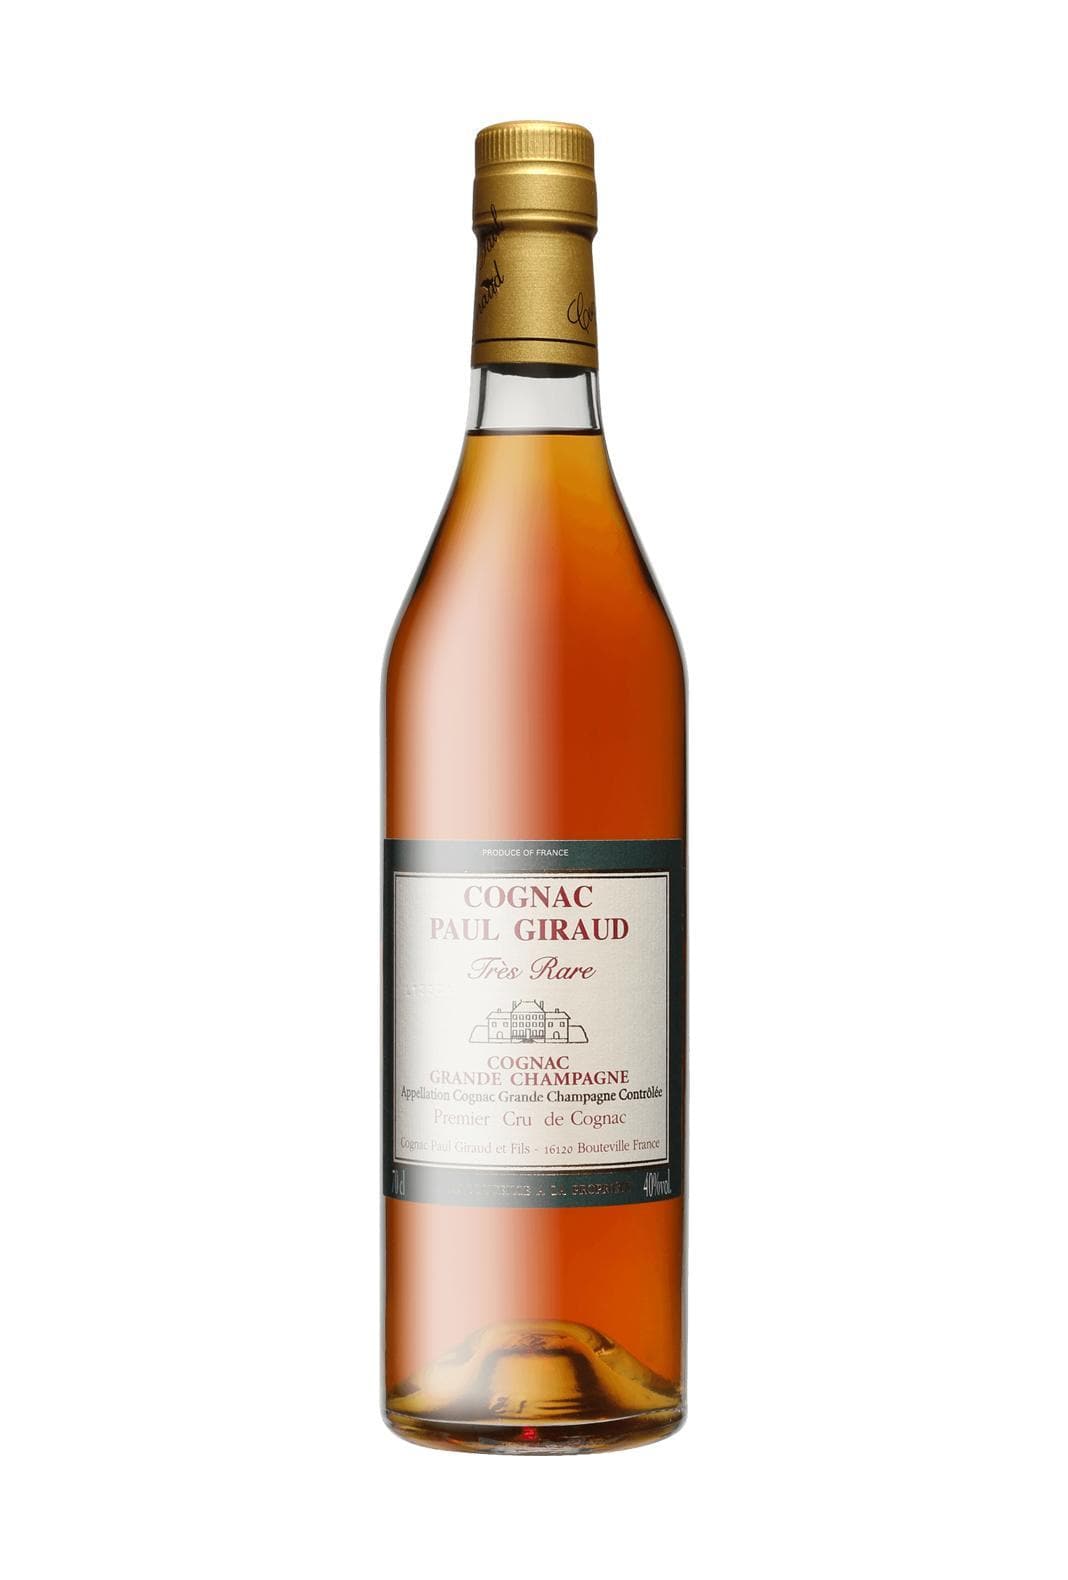 Paul Giraud Cognac Grand Champagne 58 years Tres Rare 40% 700ml | Brandy | Shop online at Spirits of France